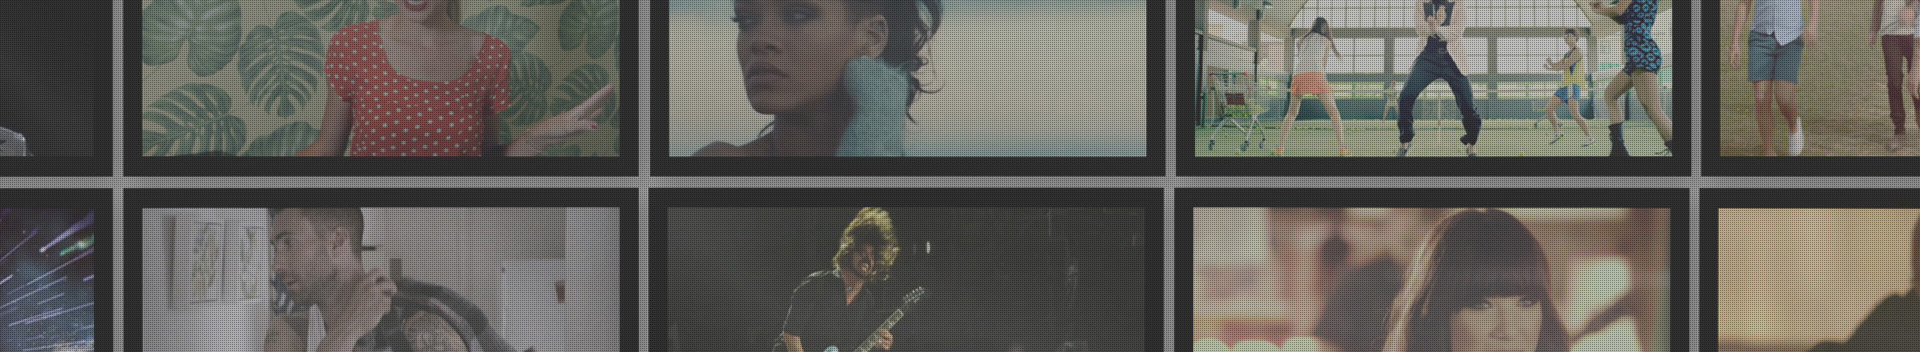 Music Videos Screens Wall